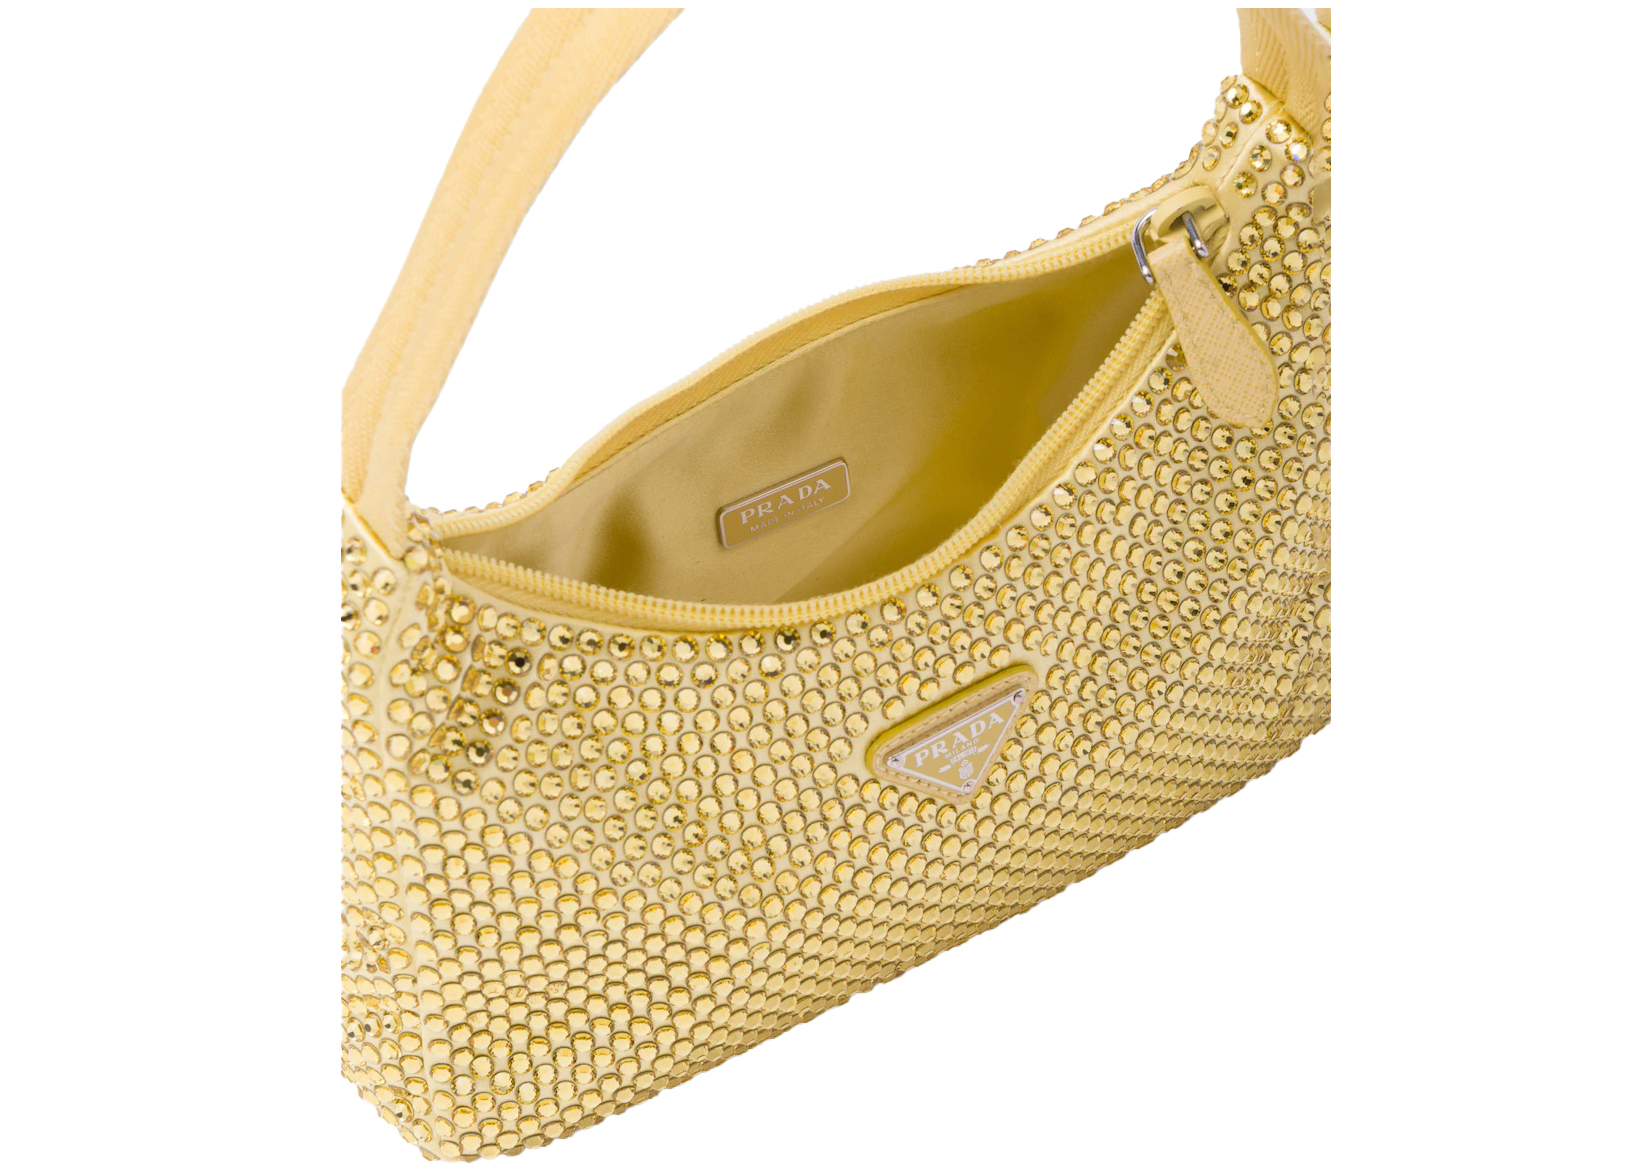 Prada Cleo Satin Bag With Appliques Pineapple Yellow